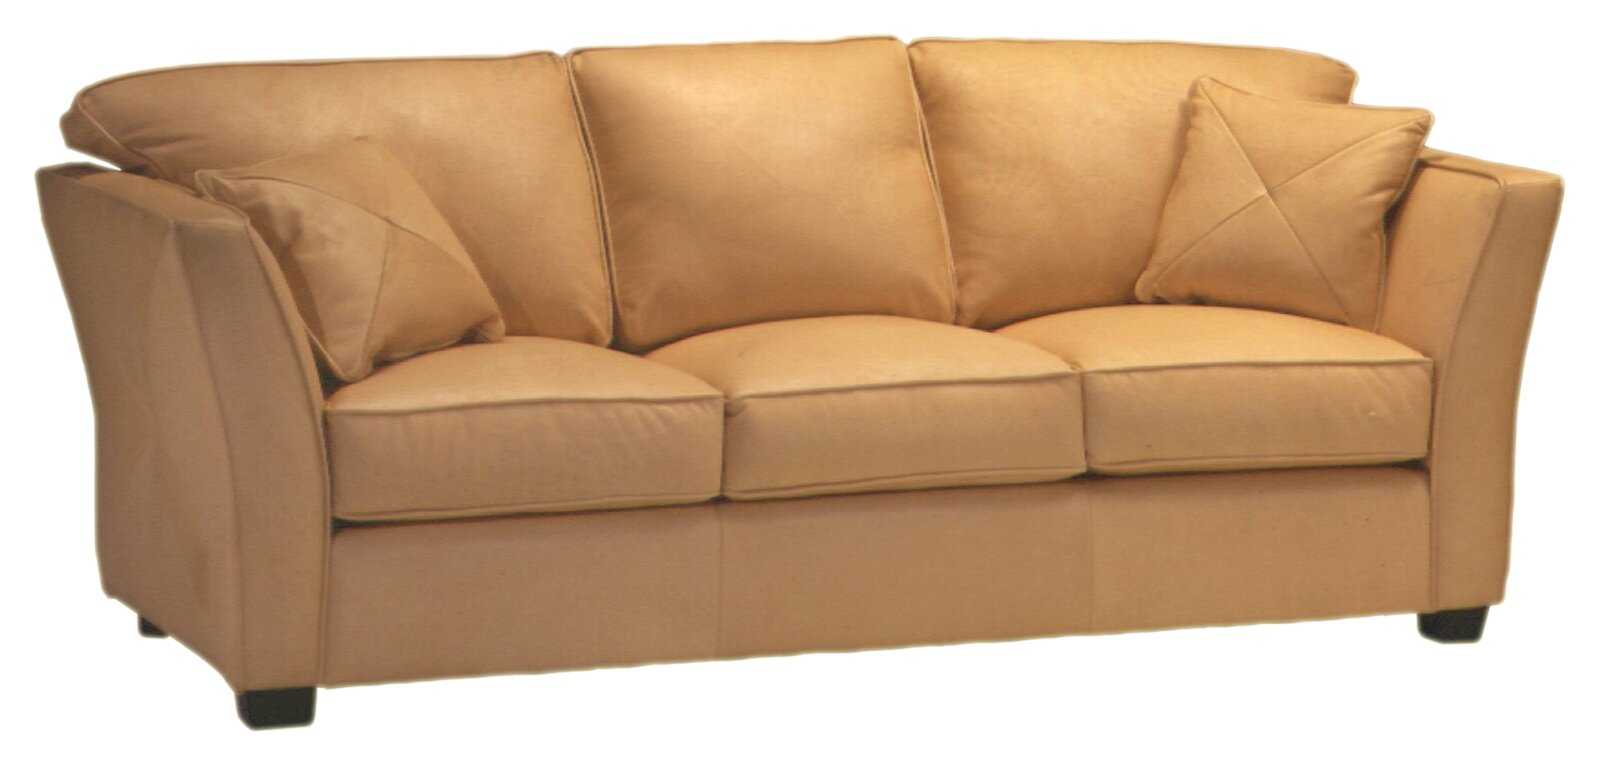 manhattan style leather sofa